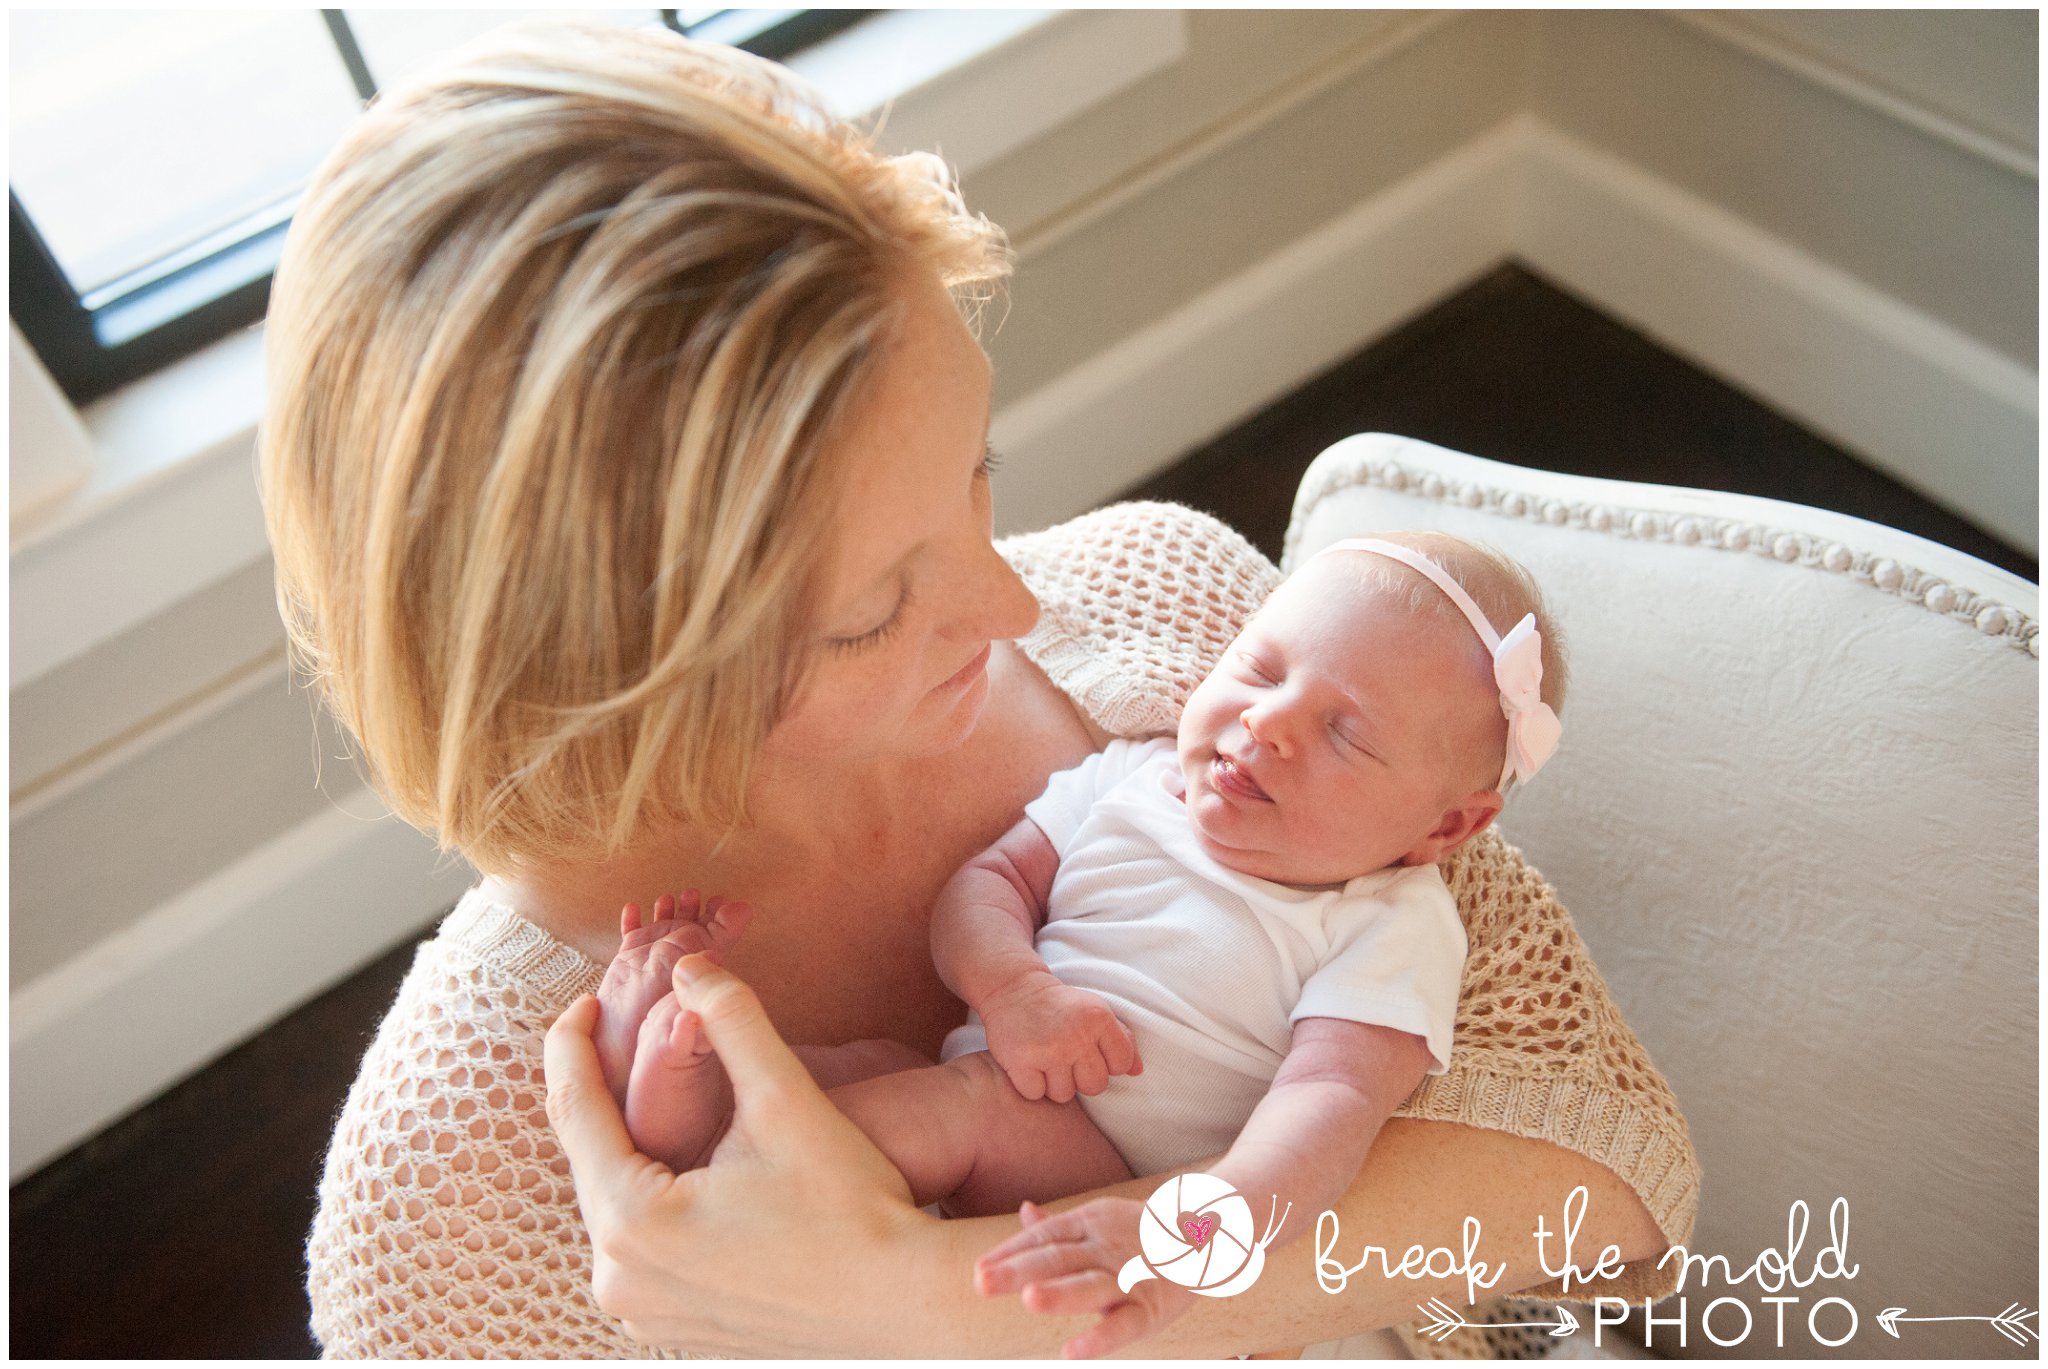 break-the-mold-photo-nursing-body-love-baby-pregnant-women-powerful-breastfeeding-sessions_7249.jpg